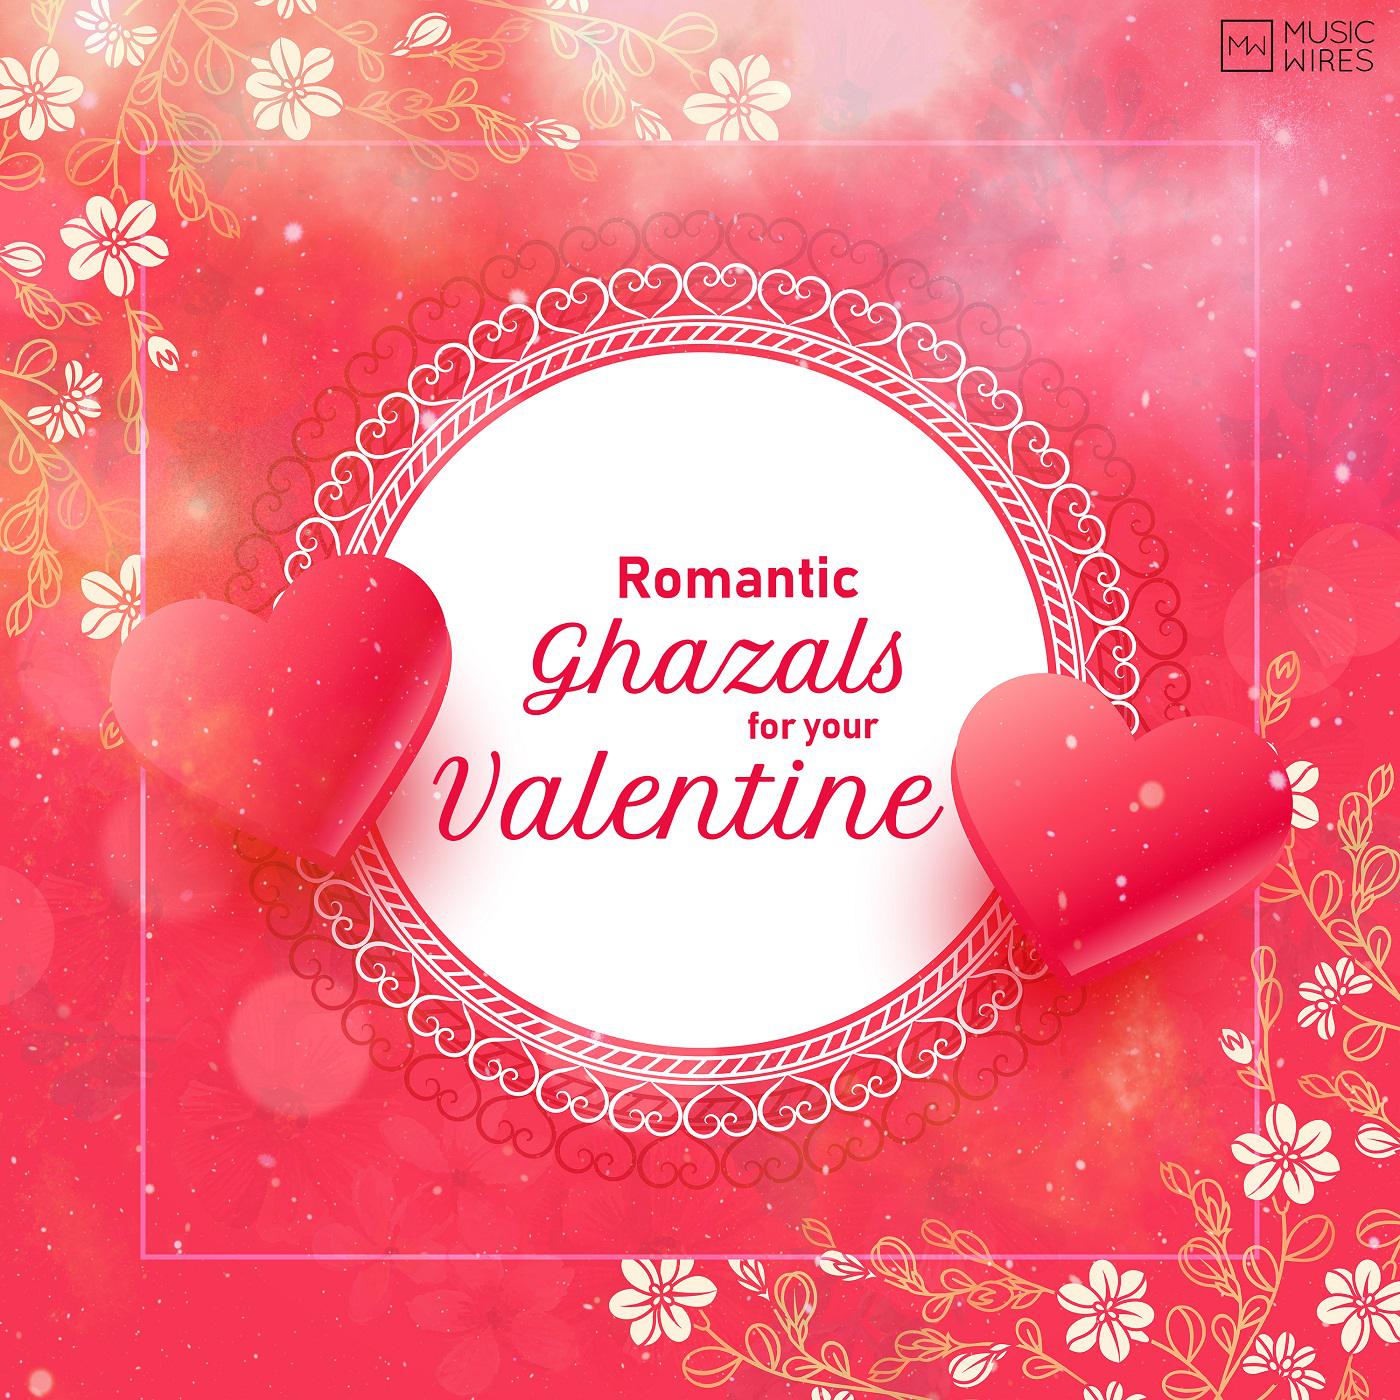 Romantic Ghazals For Your Valentine